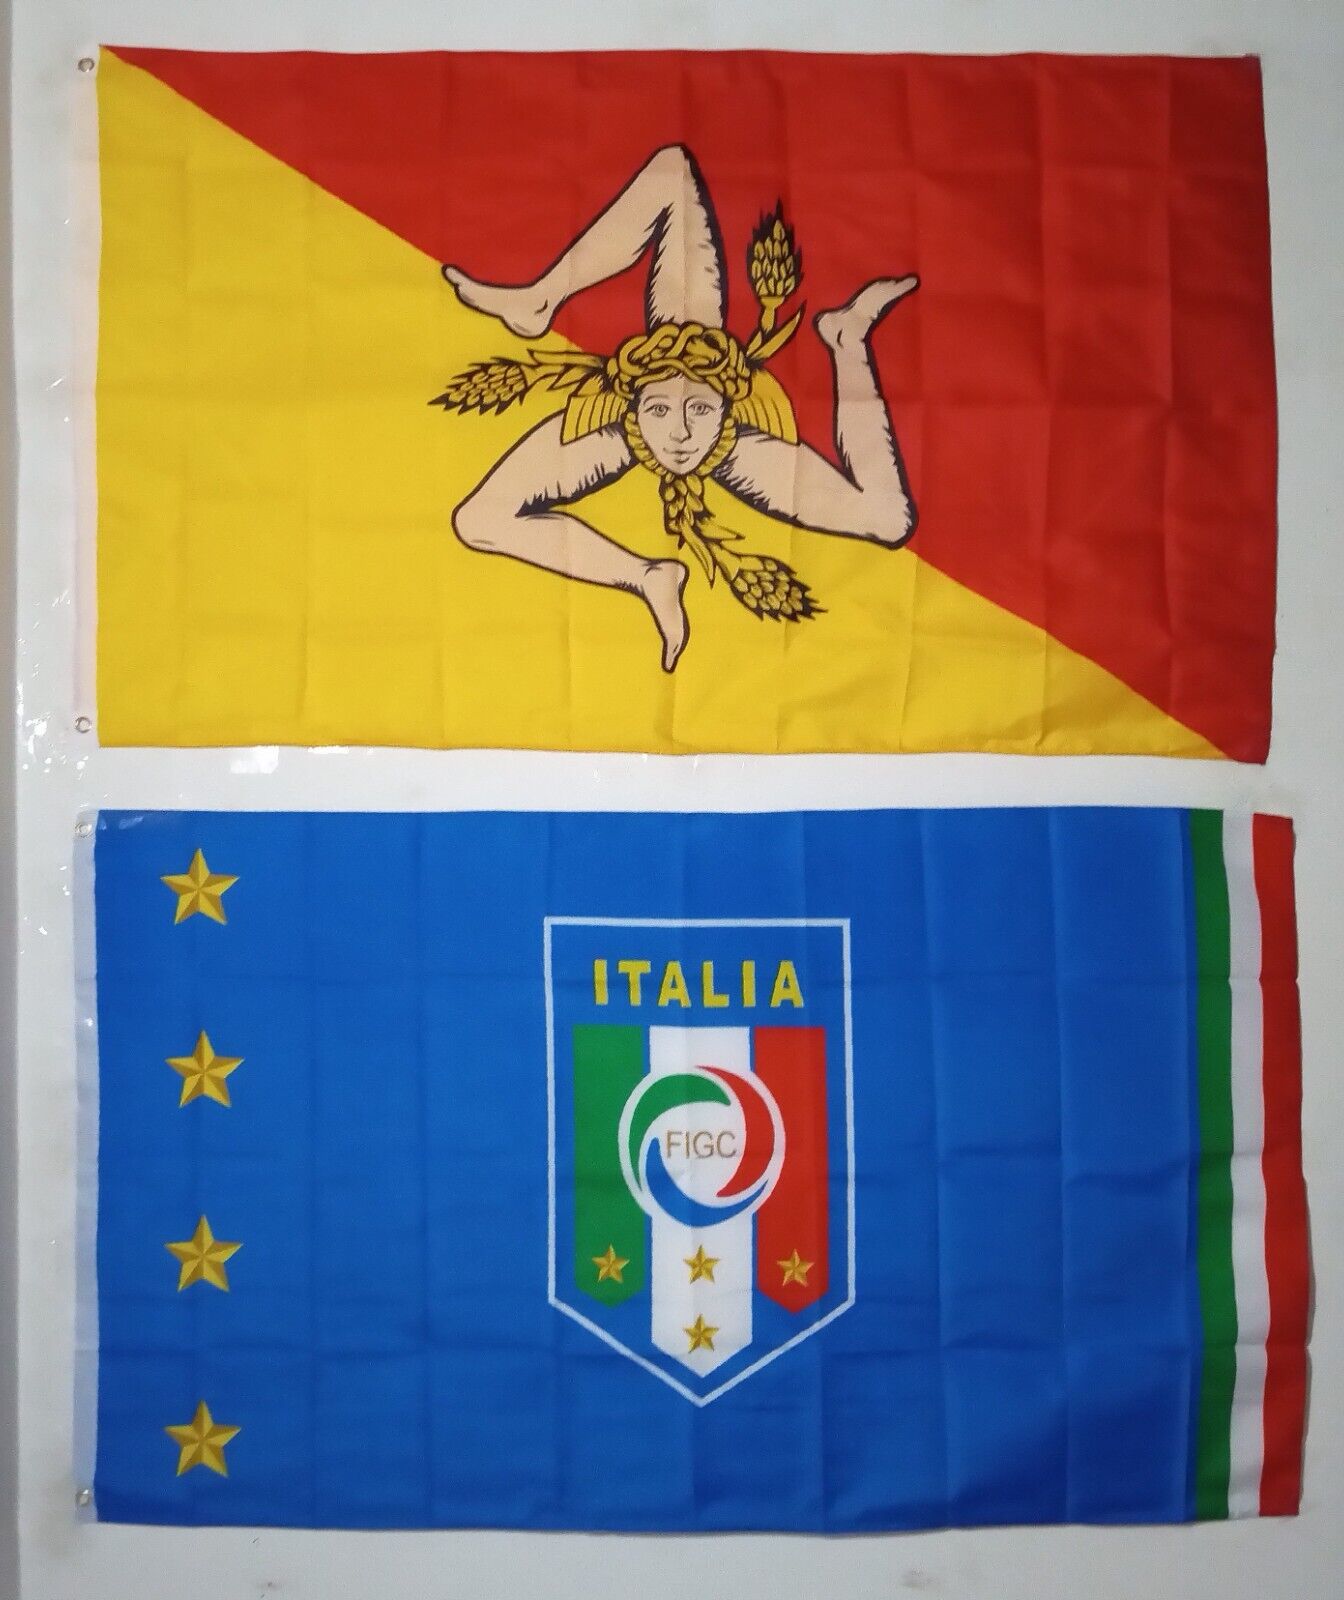 1 ITALY FEDERATION FLAG + 1 SICILIAN FLAG (3X5 FT) $35